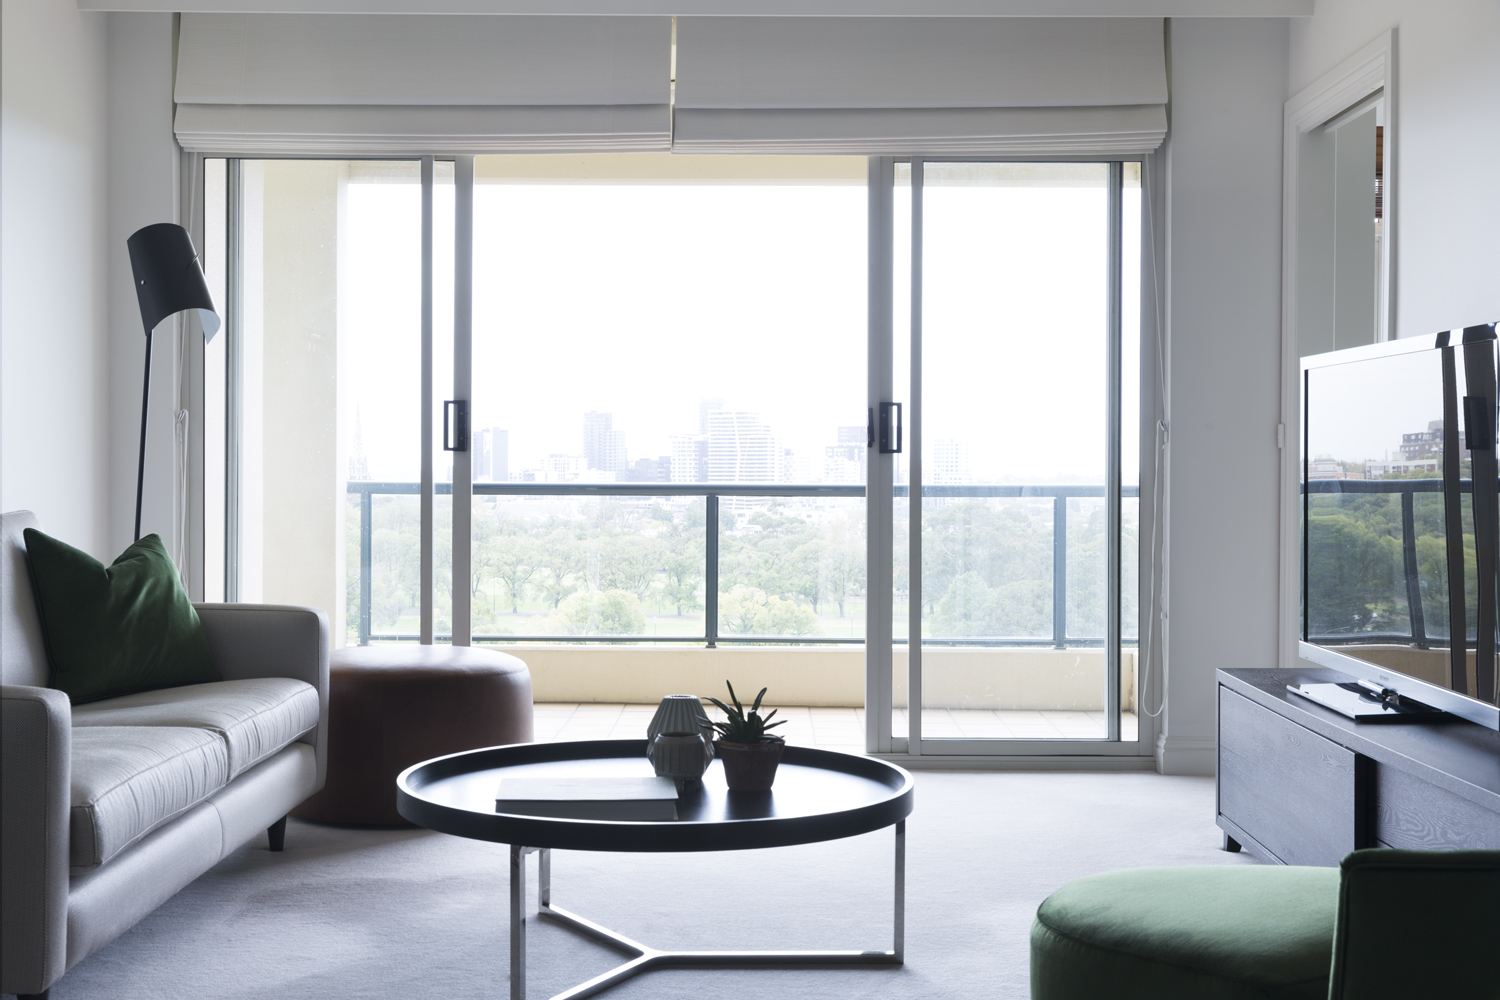 Melbourne apartment makeover by interior designer Meredith Lee